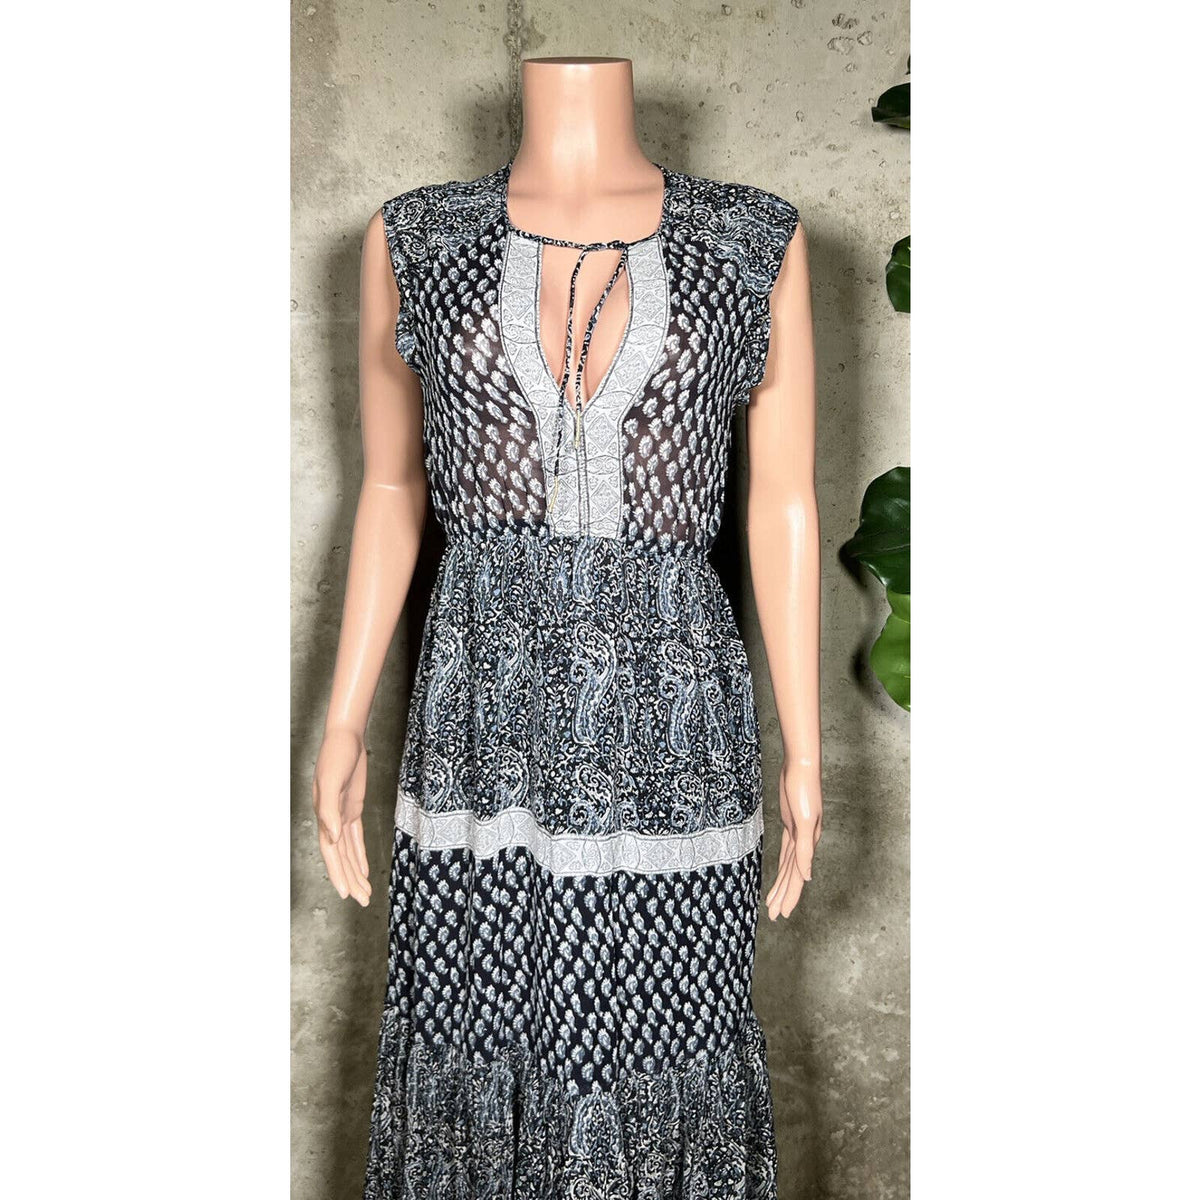 Ulla Johnson 100% Silk Full Length Dress Sz.4